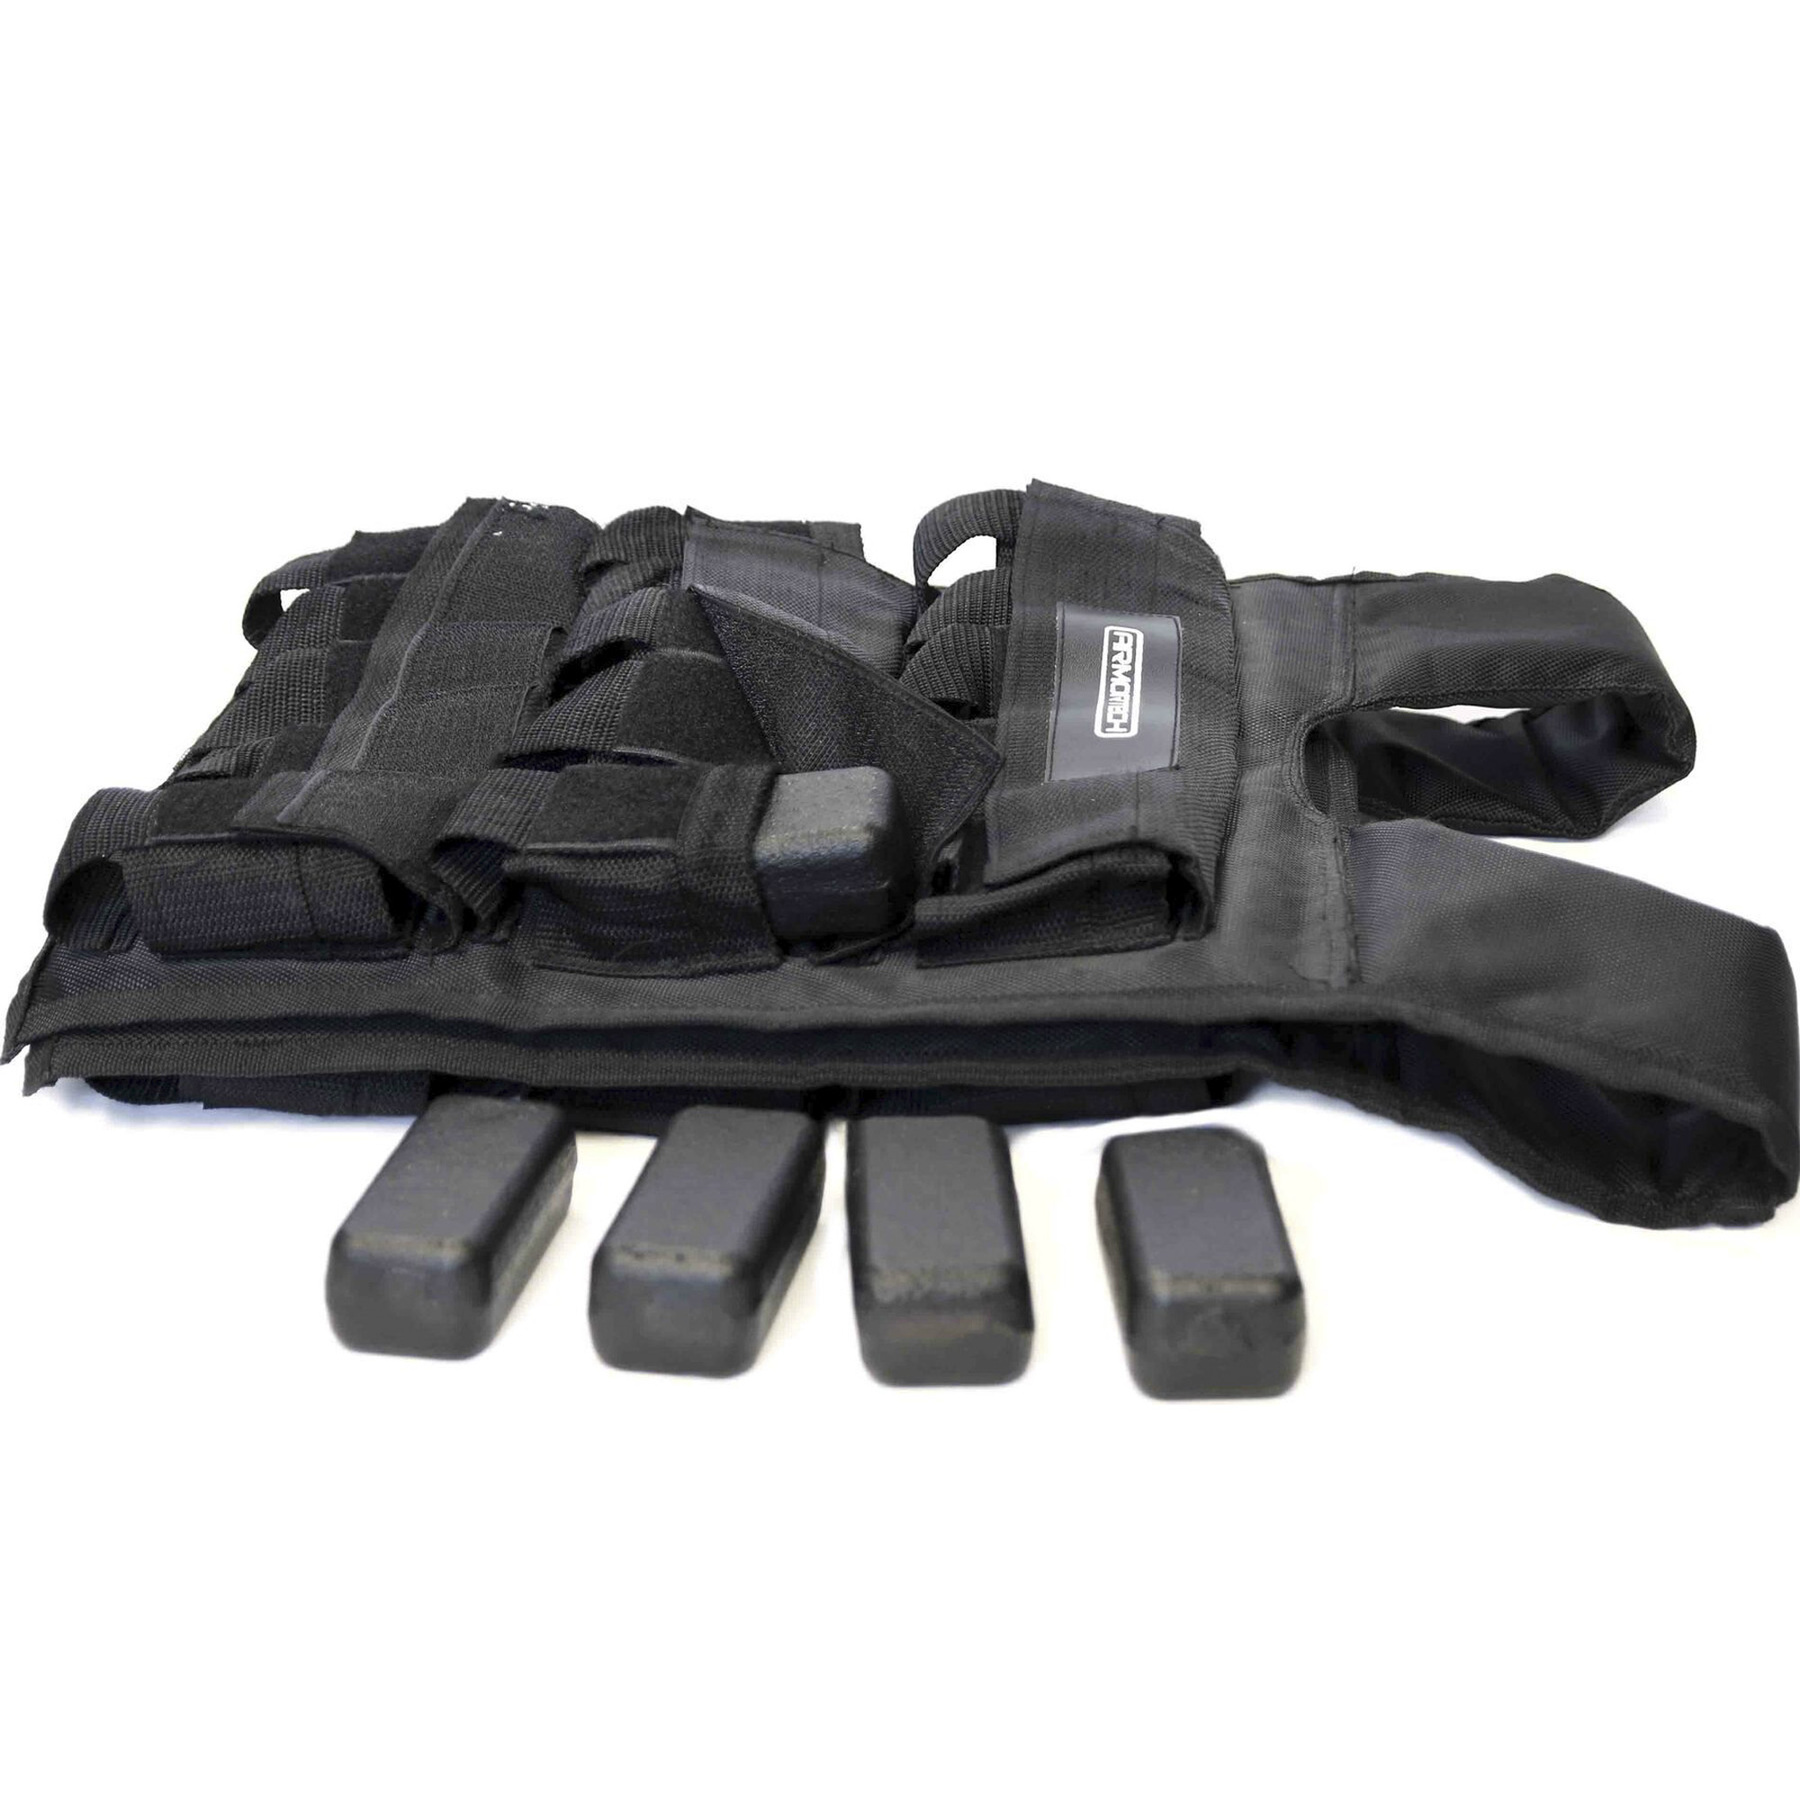 Armortech adjustable weight vests 10 - 30 KG